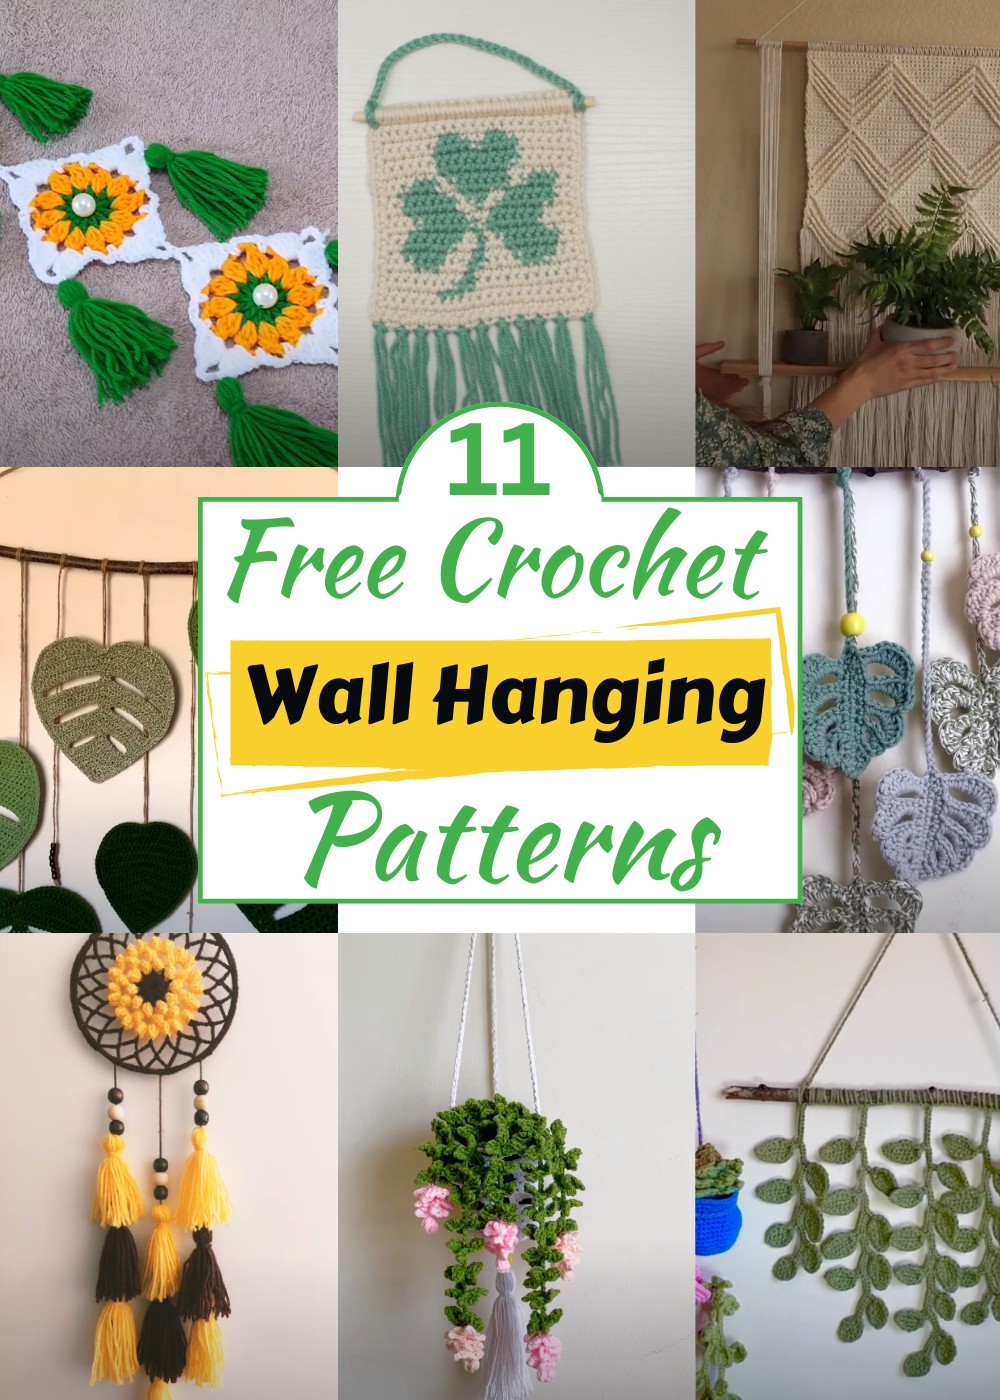 Crochet Wall Hanging Patterns